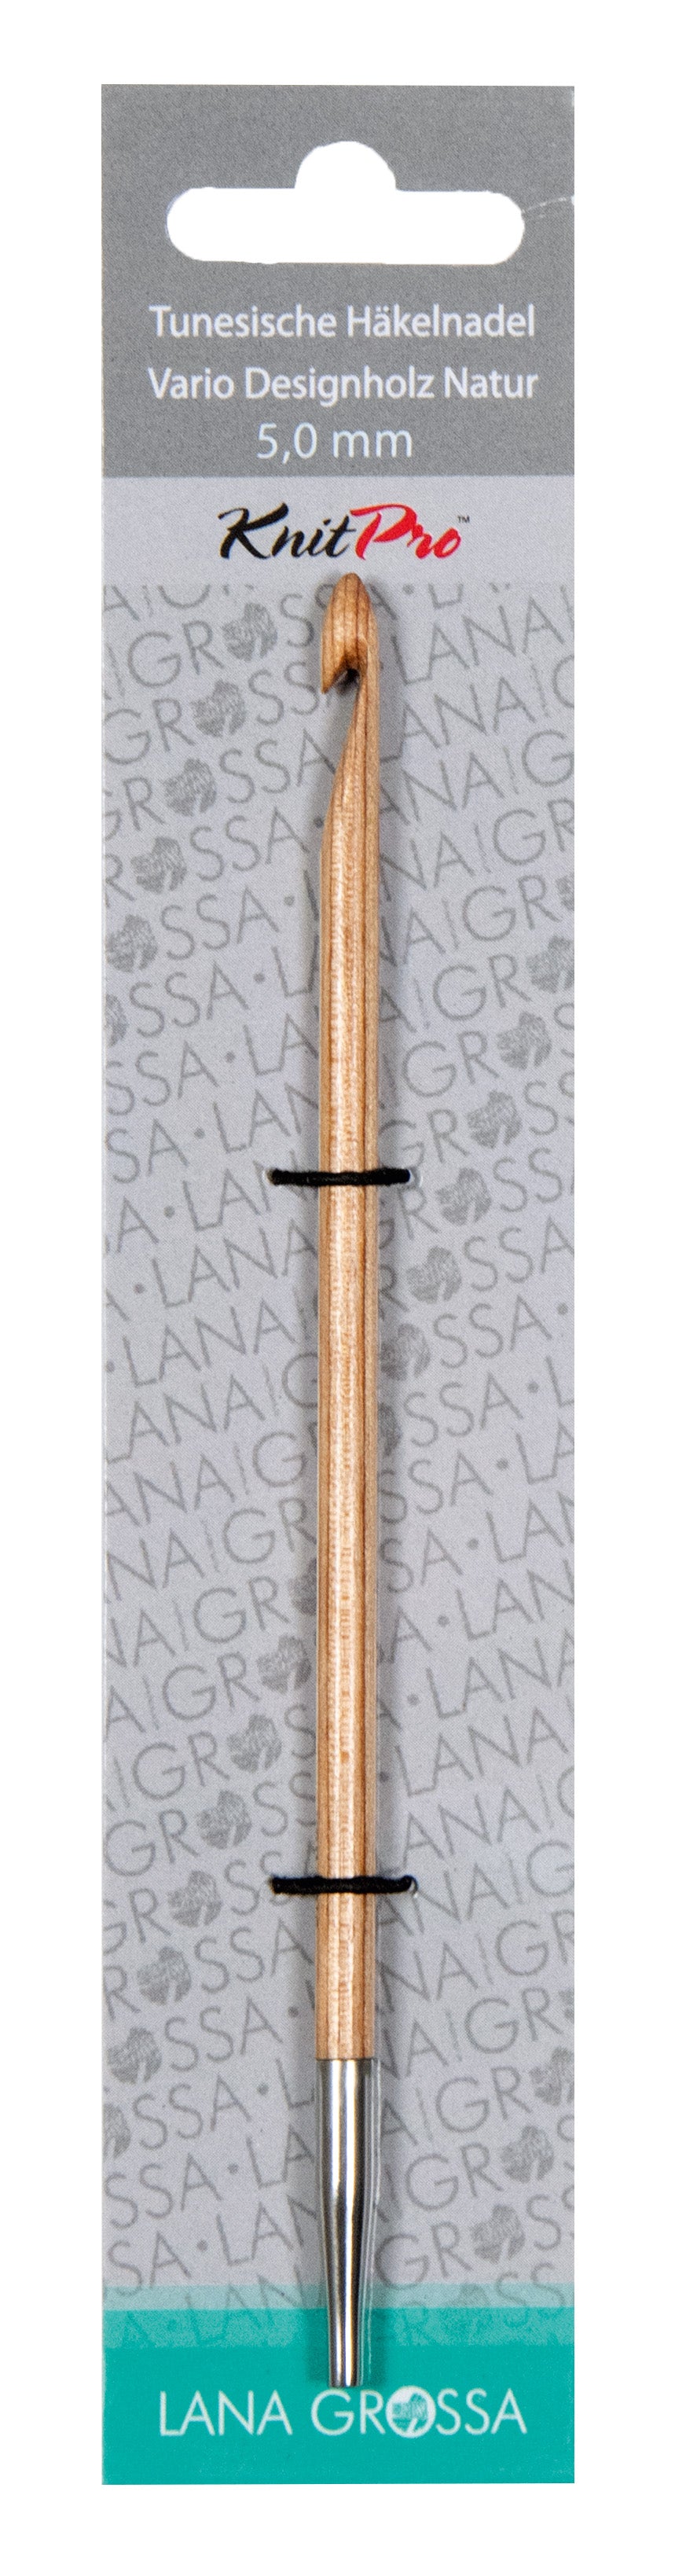 Lana Grossa tunesische Häkelnadel Vario 5,5mm